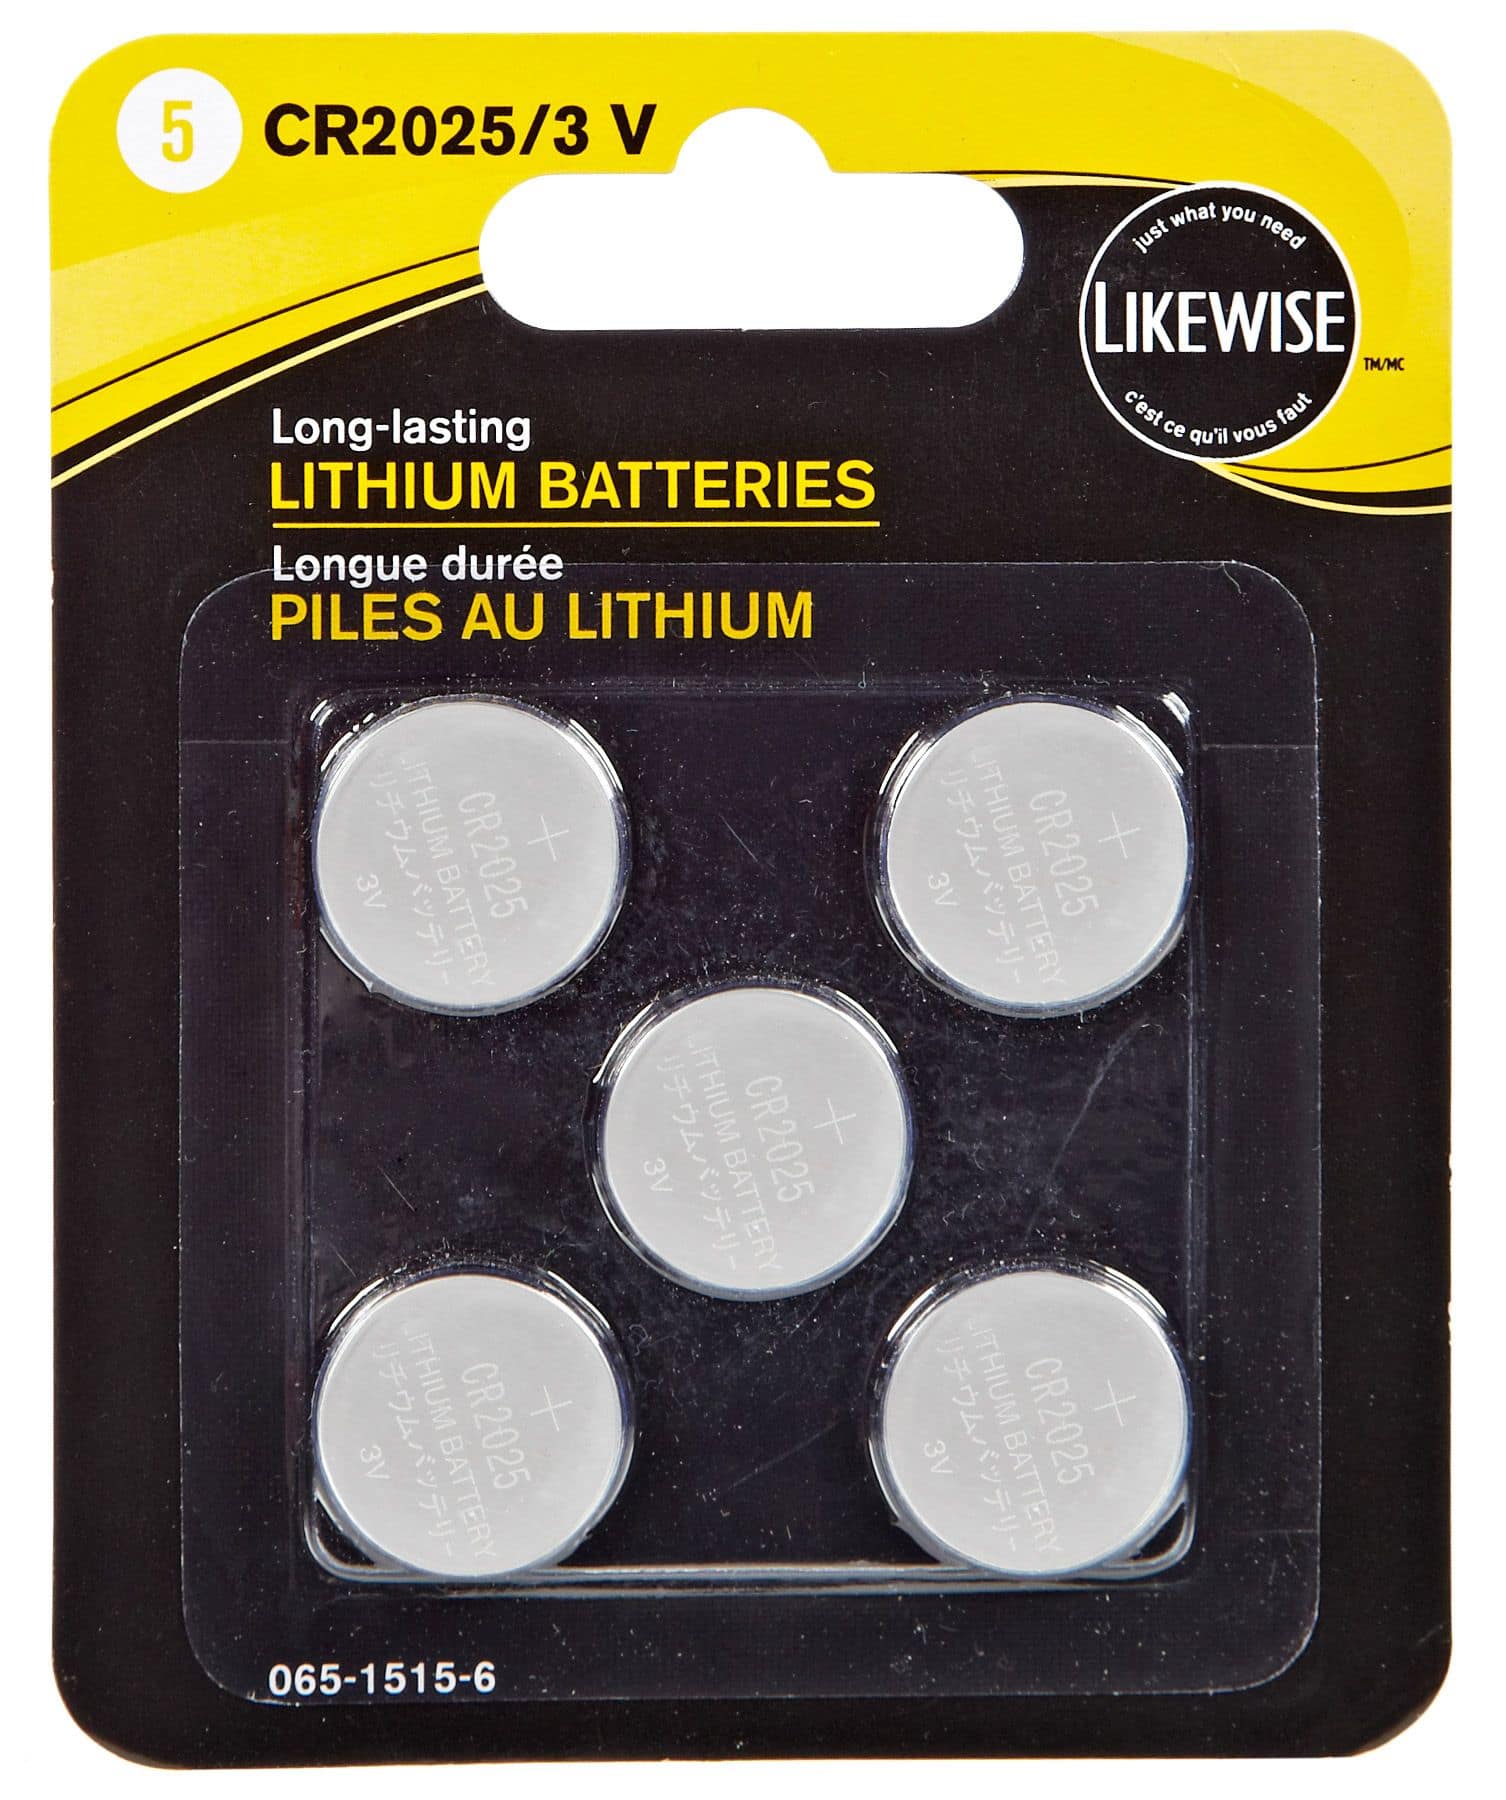 Piles 3 V au lithium 2025 Likewise, paq. 5